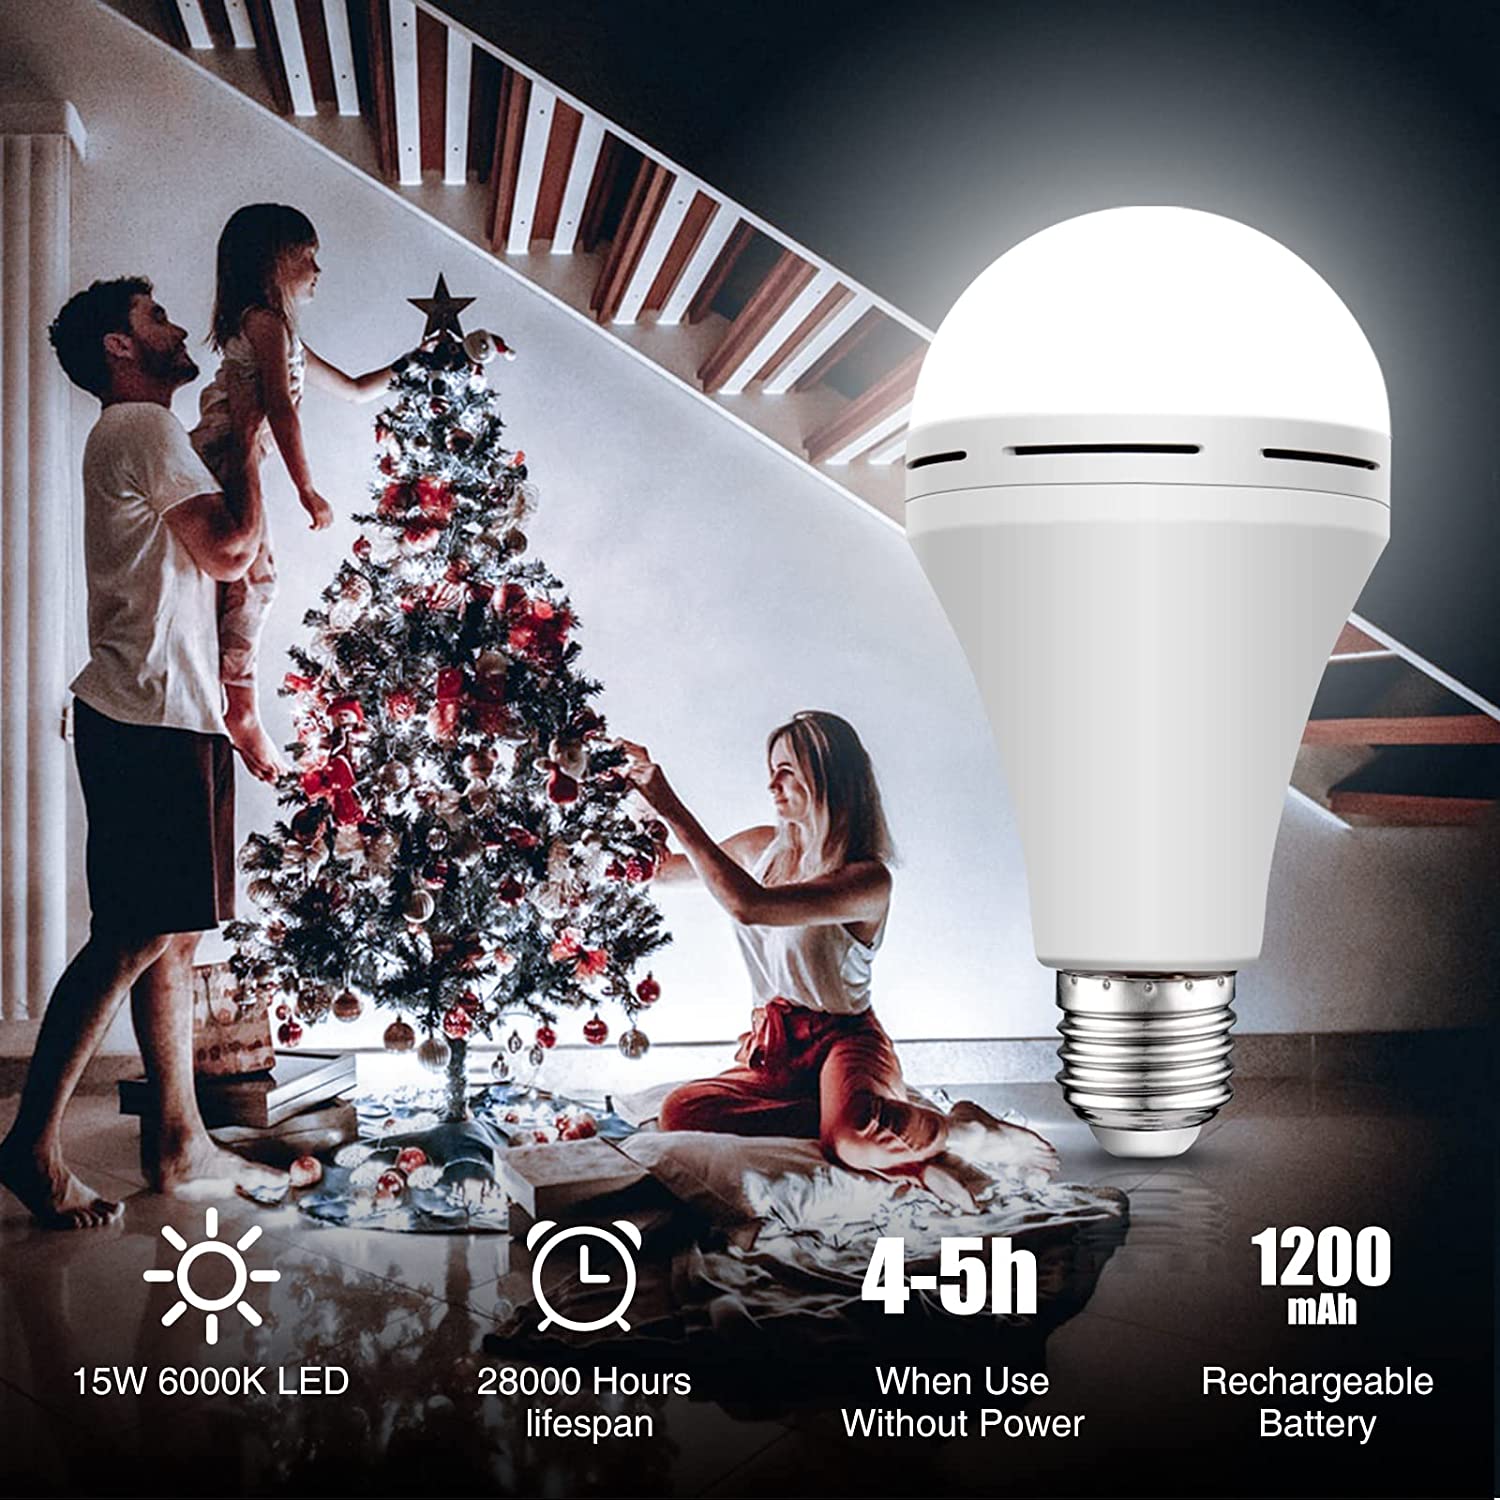 Bulb light 9 W E27 emergency lamp rechargeable 